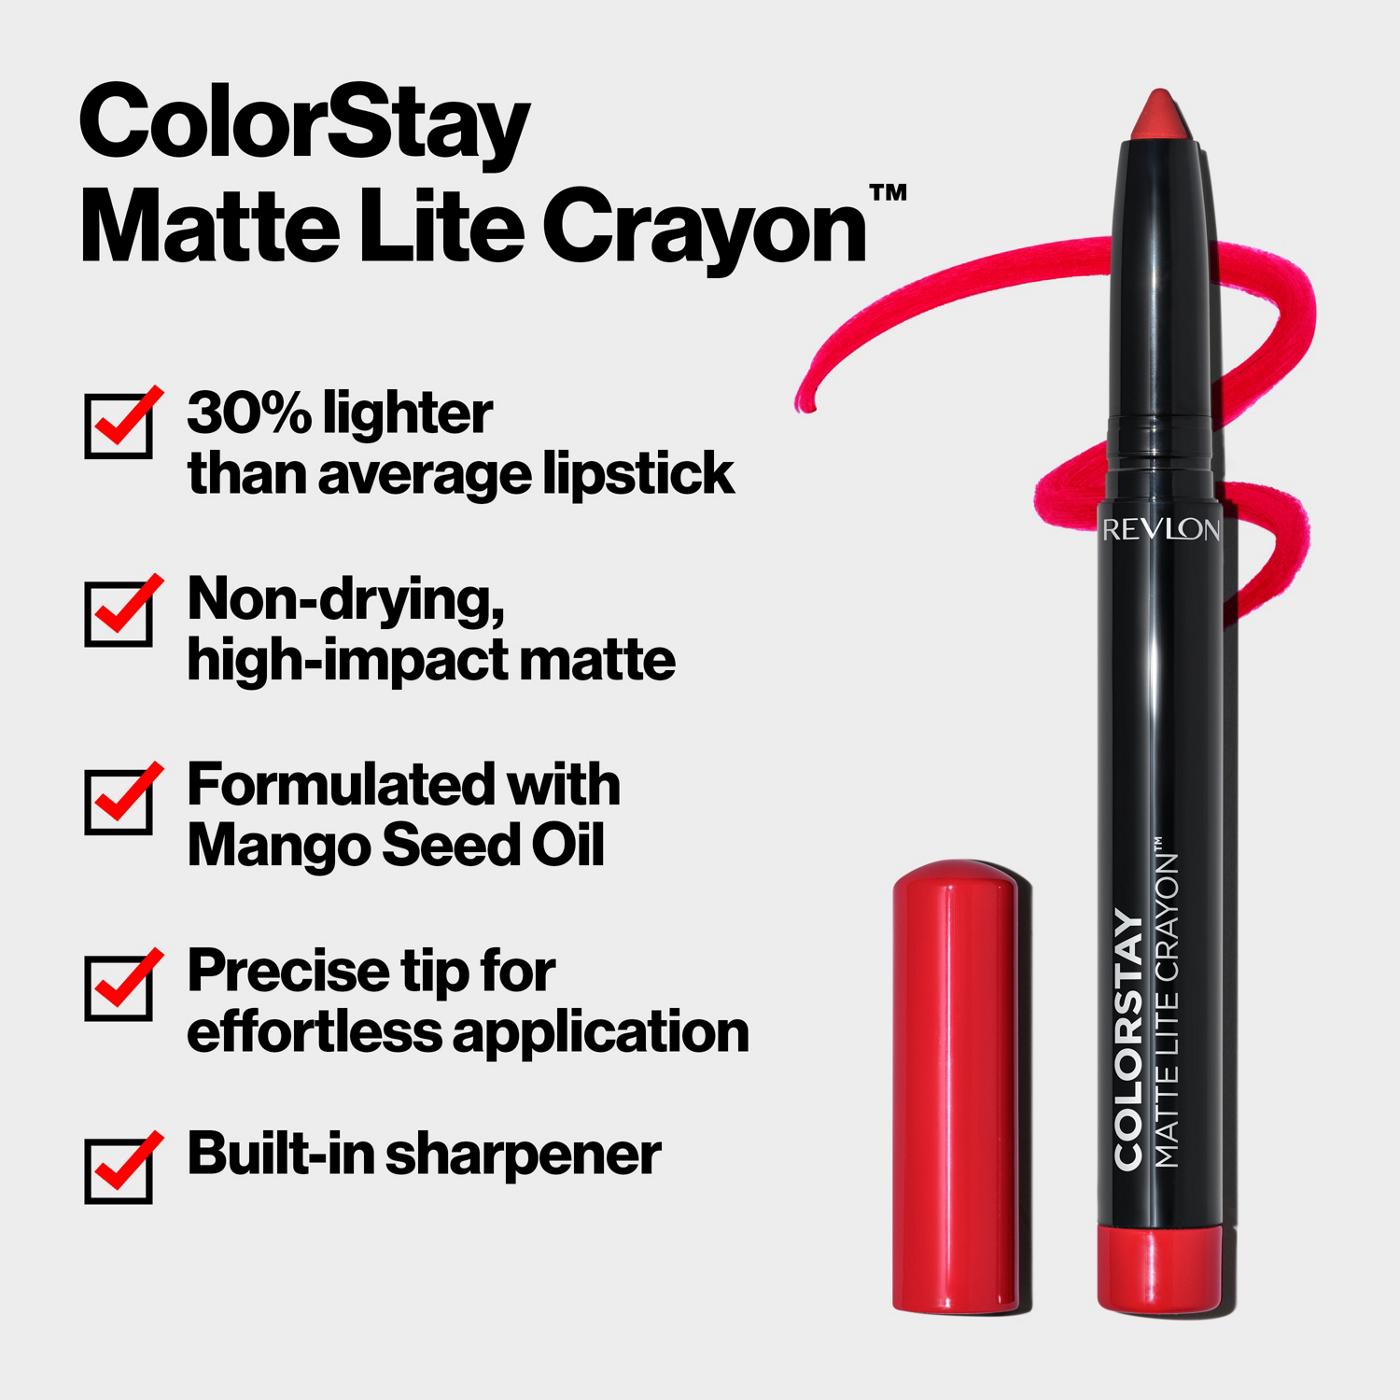 Revlon ColorStay Matte Lite Crayon Lipstick - Take Flight; image 7 of 7